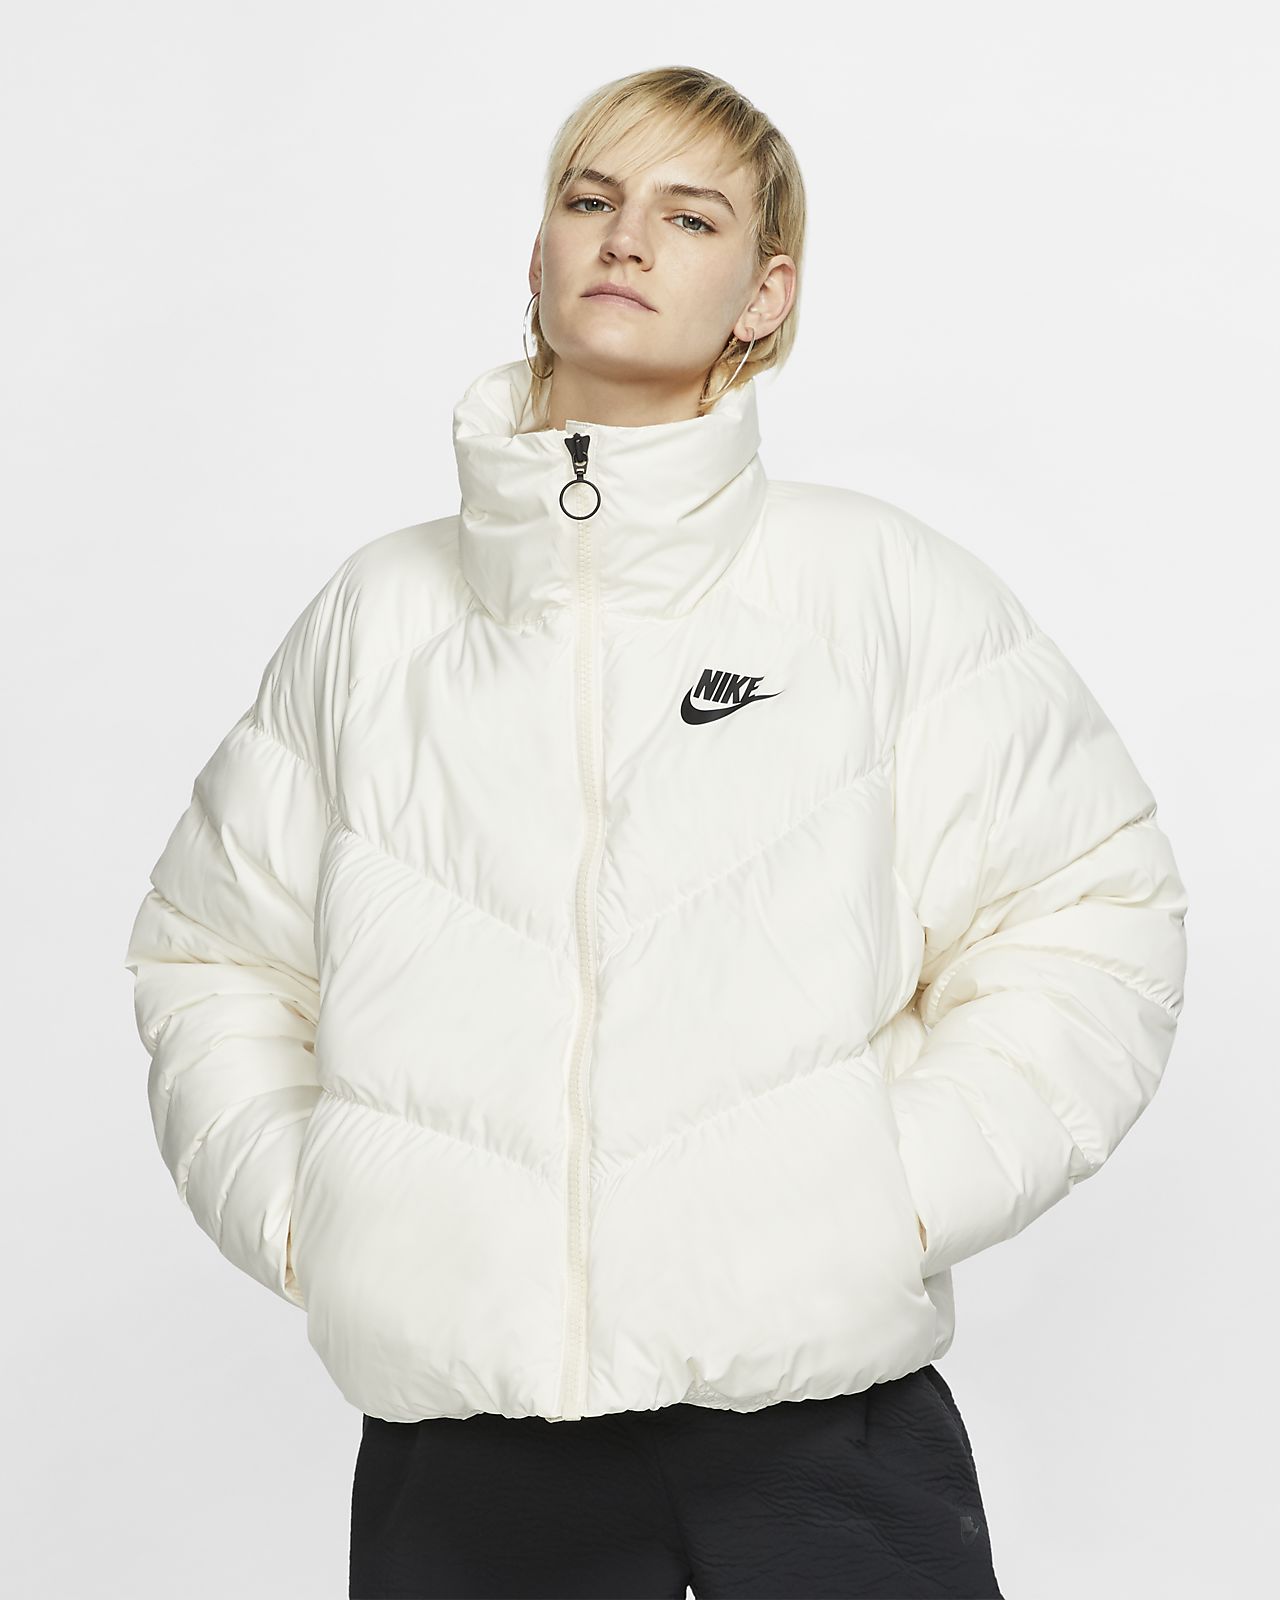 chaquetas nike españa Nike online – Compra productos Nike baratos